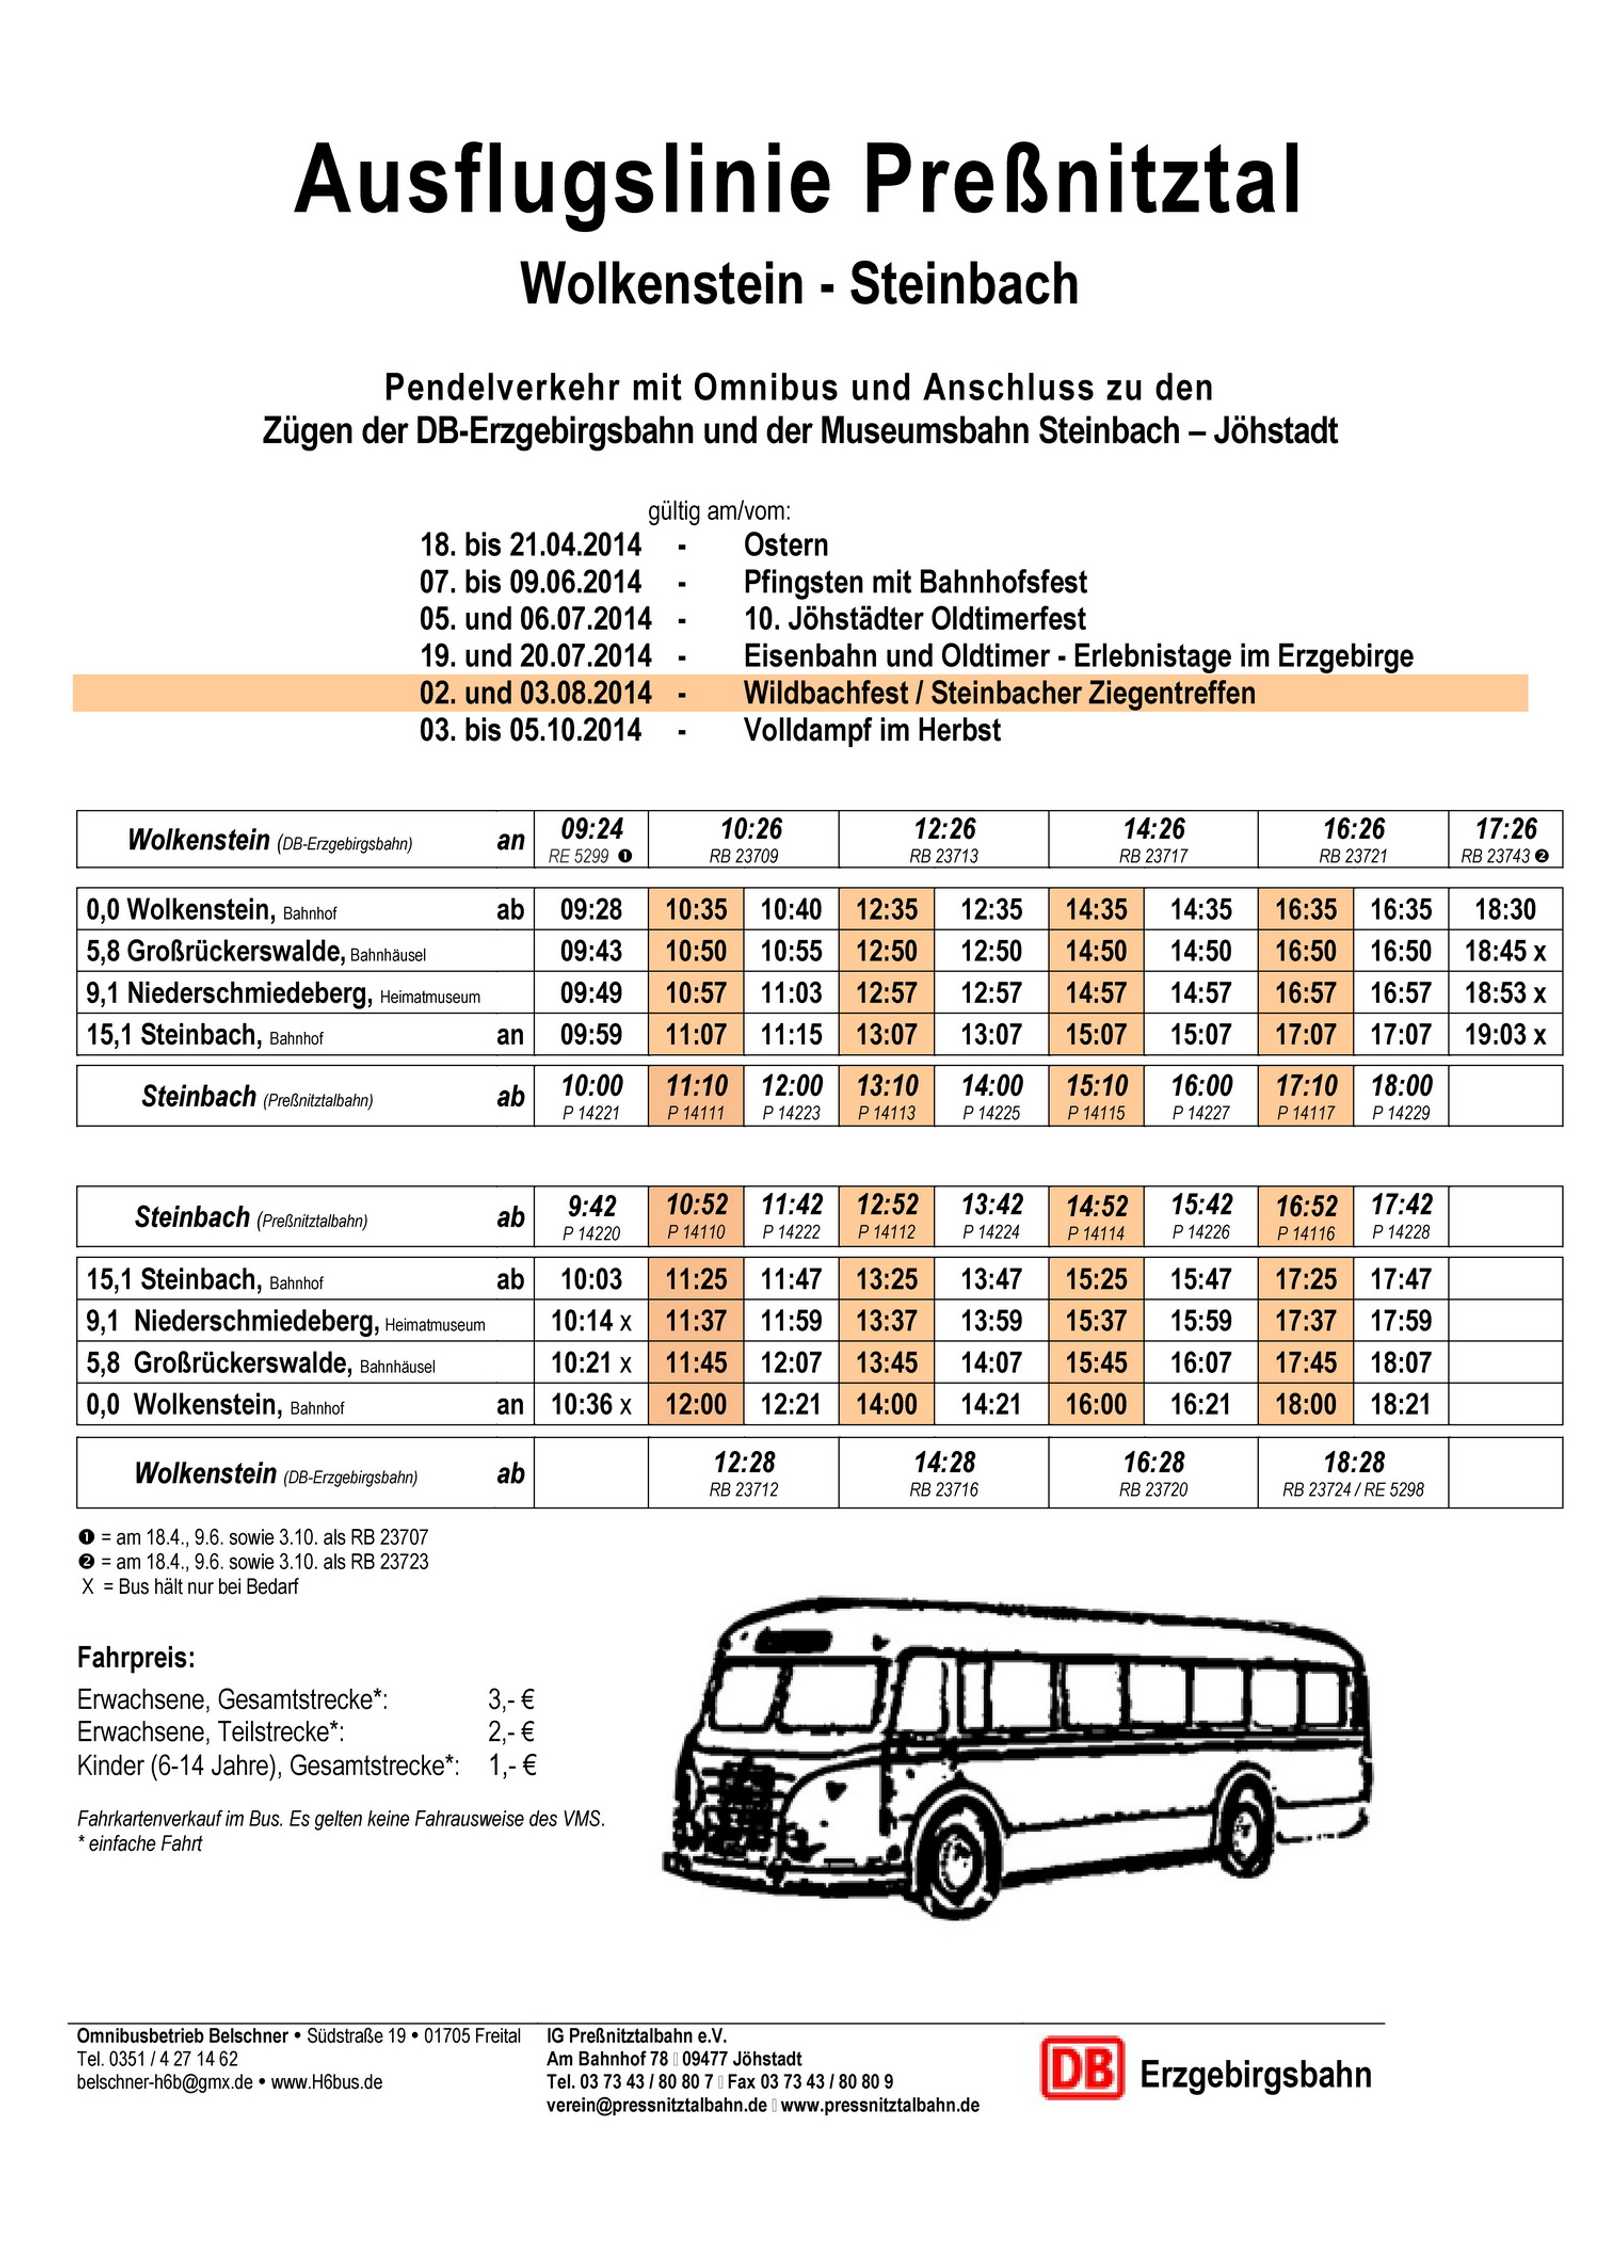 Fahrplan der Ausflugsline Preßnitztal 2014